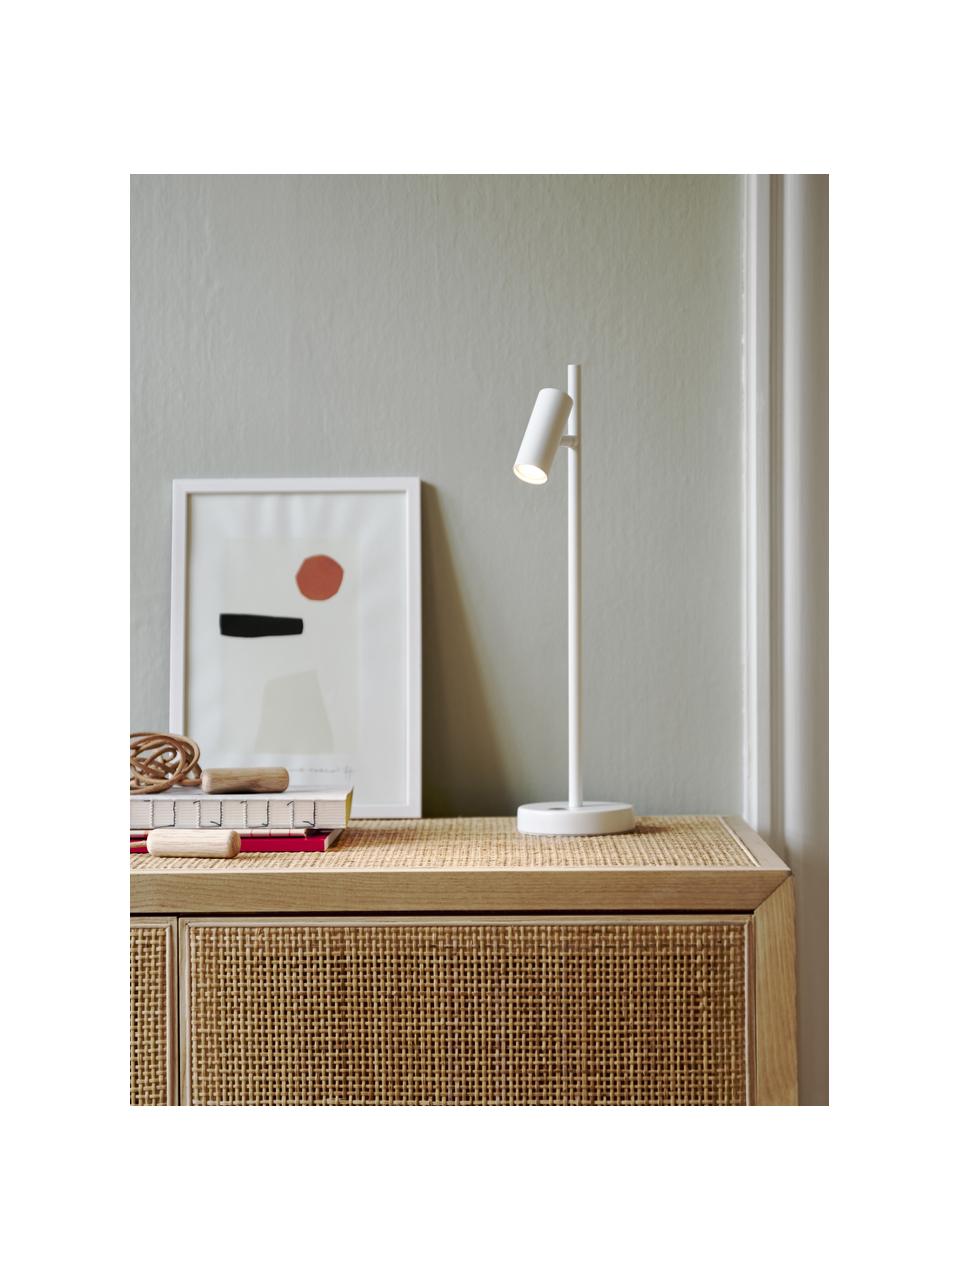 Lámpara de escritorio LED regulable Omari, Pantalla: metal recubierto, Cable: plástico, Blanco, An 10 x Al 40 cm